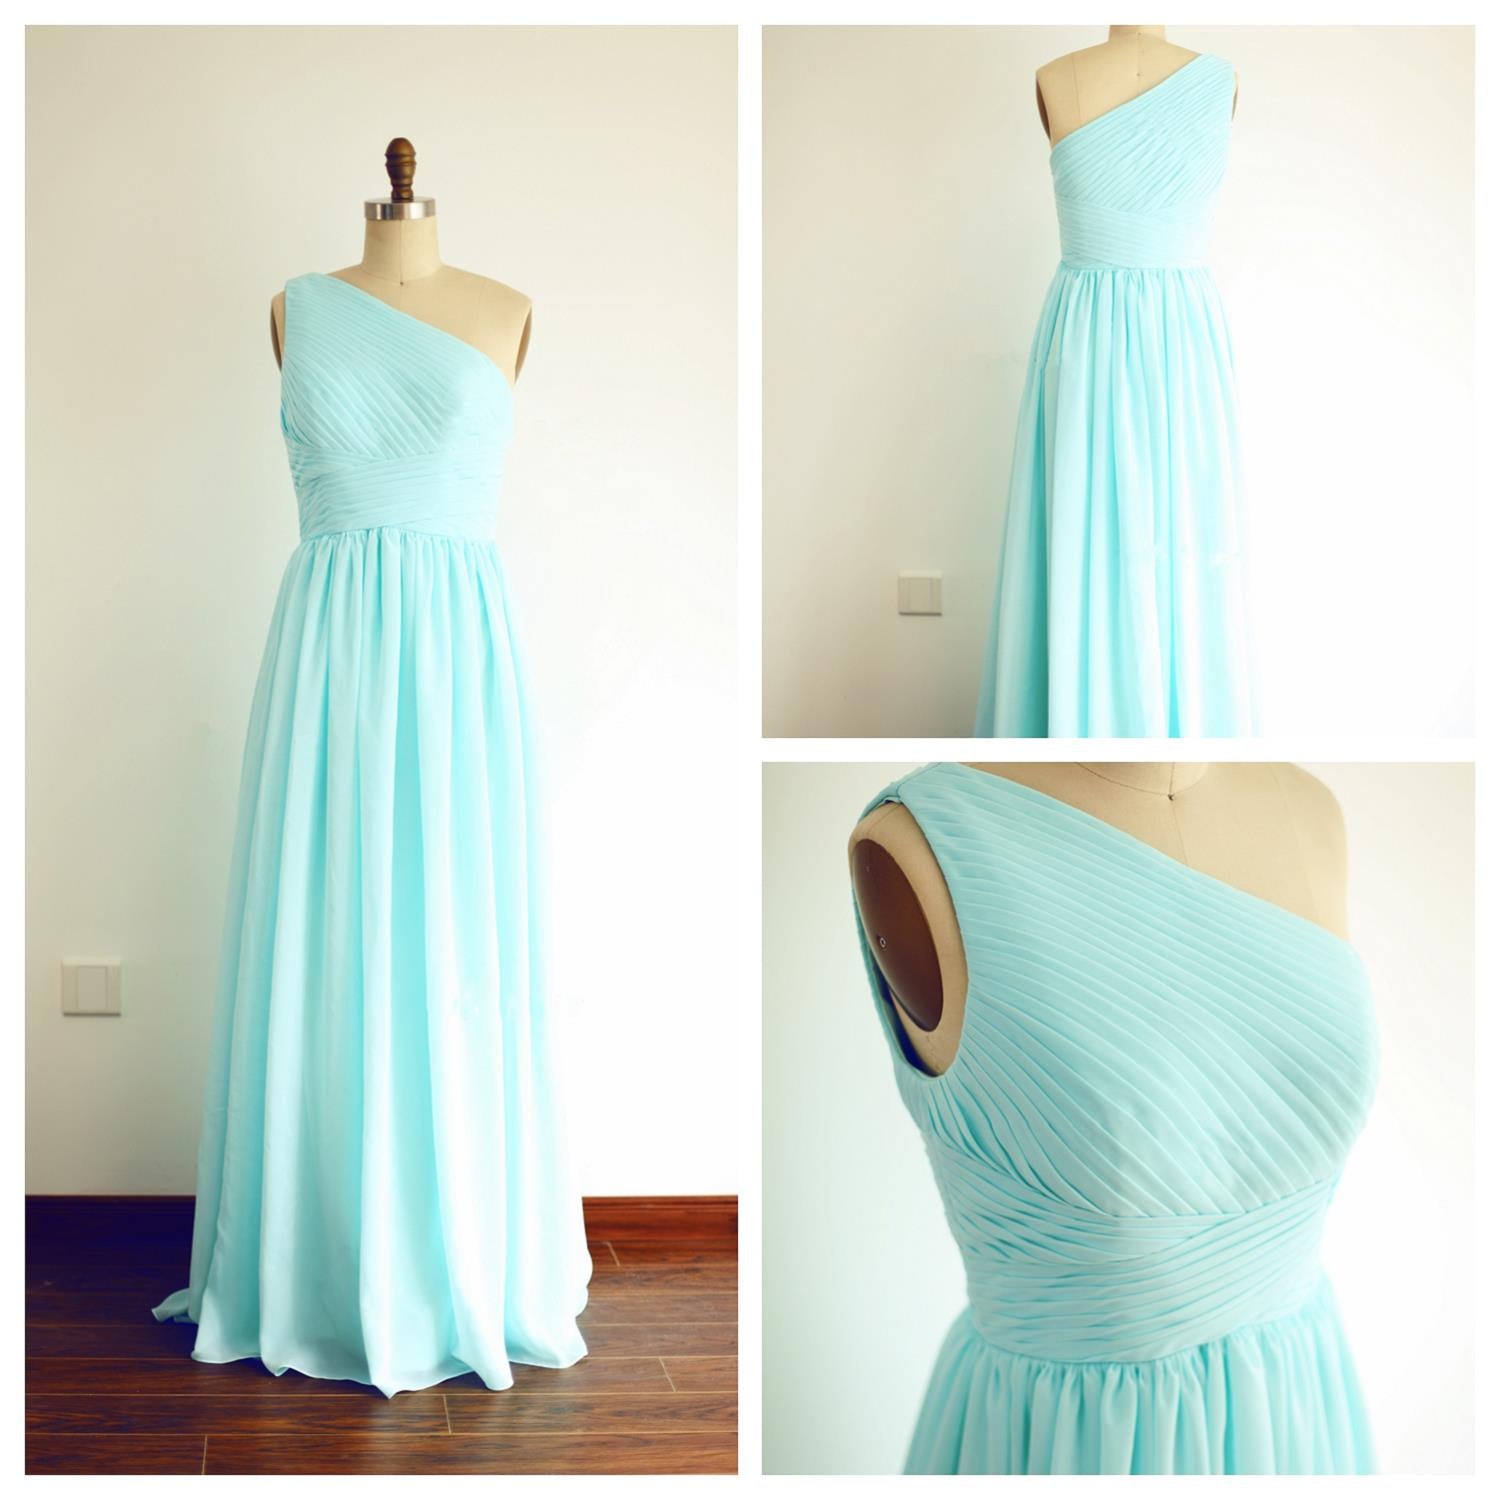 One Shoulder Mint Blue Elegant Bridesmaid Dress, Handmade Chiffon Formal Gowns